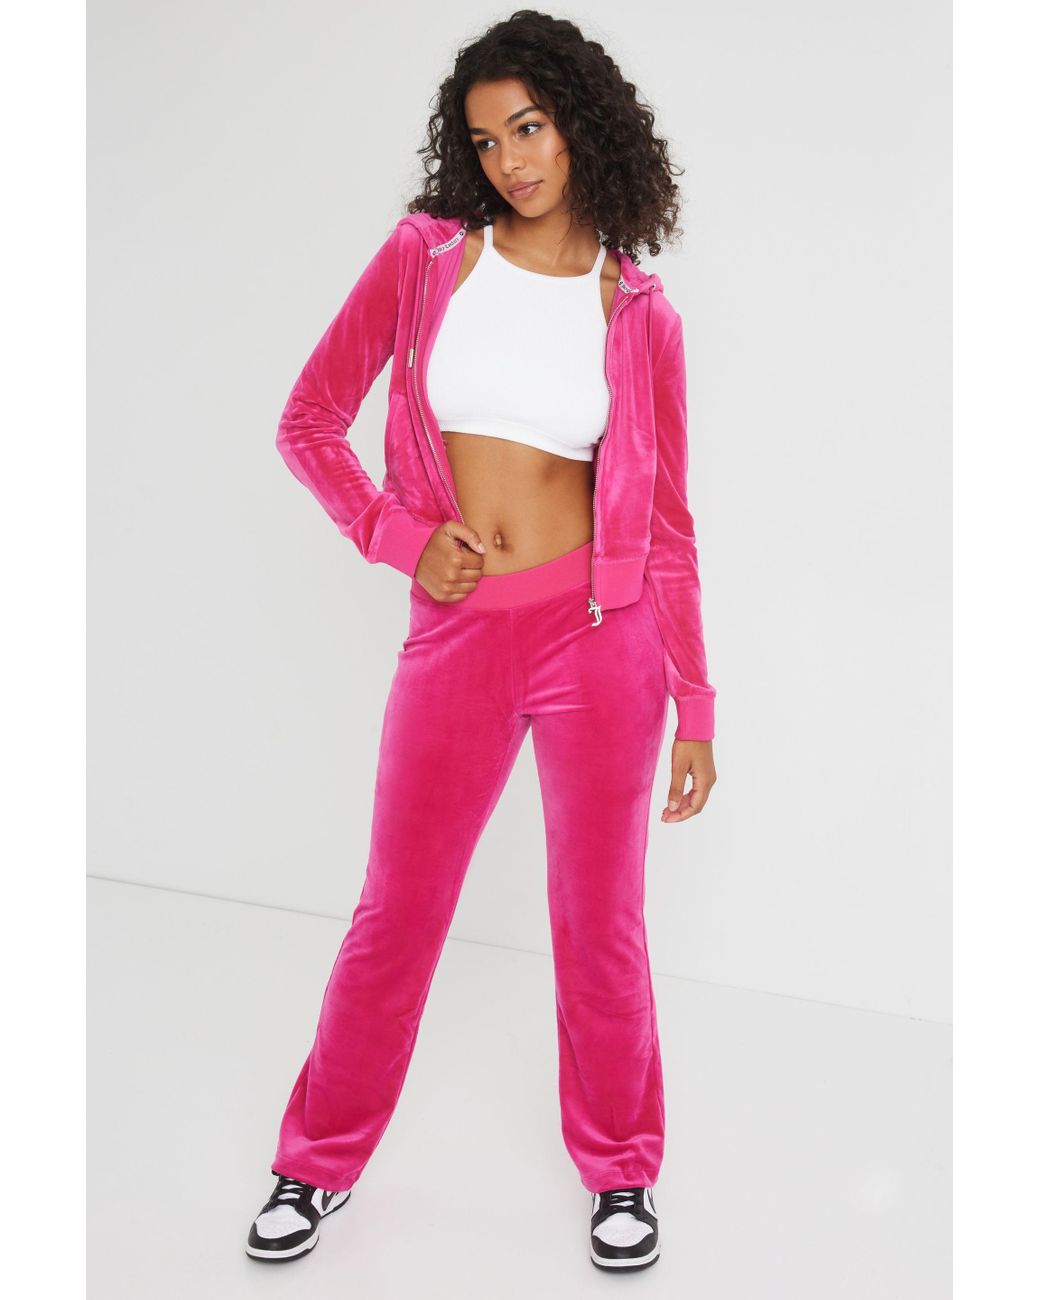 Garage Juicy Couture Og Big Bling Velour Track Pants in Pink | Lyst